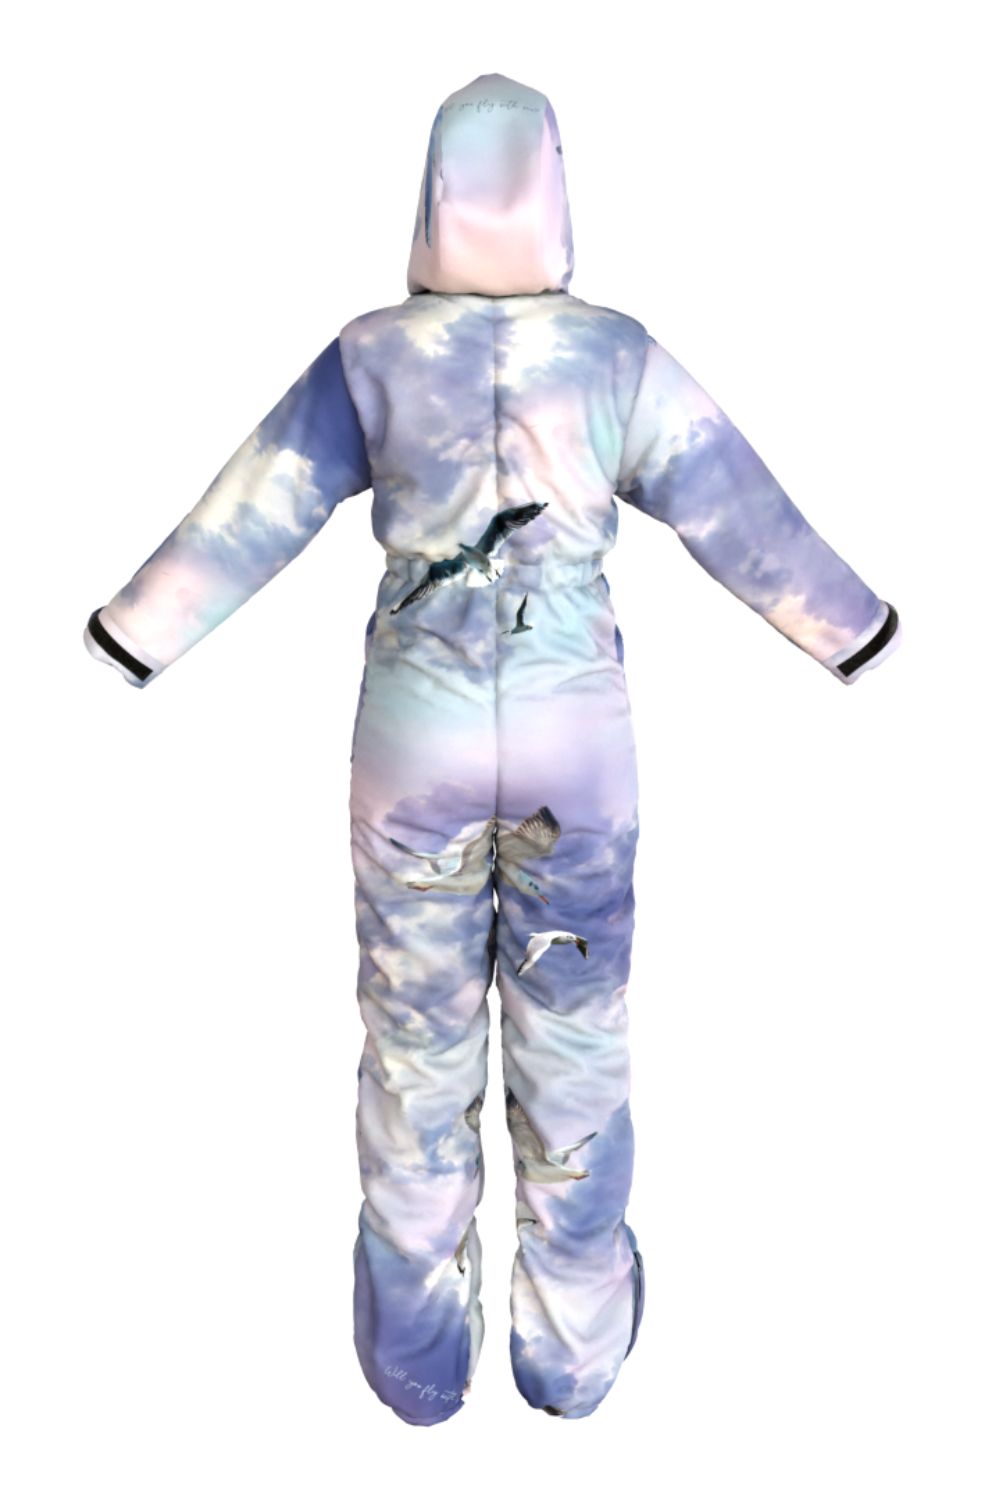 Women`s winter ski / snowboard suit in light colors with a bird print / Snowsuit